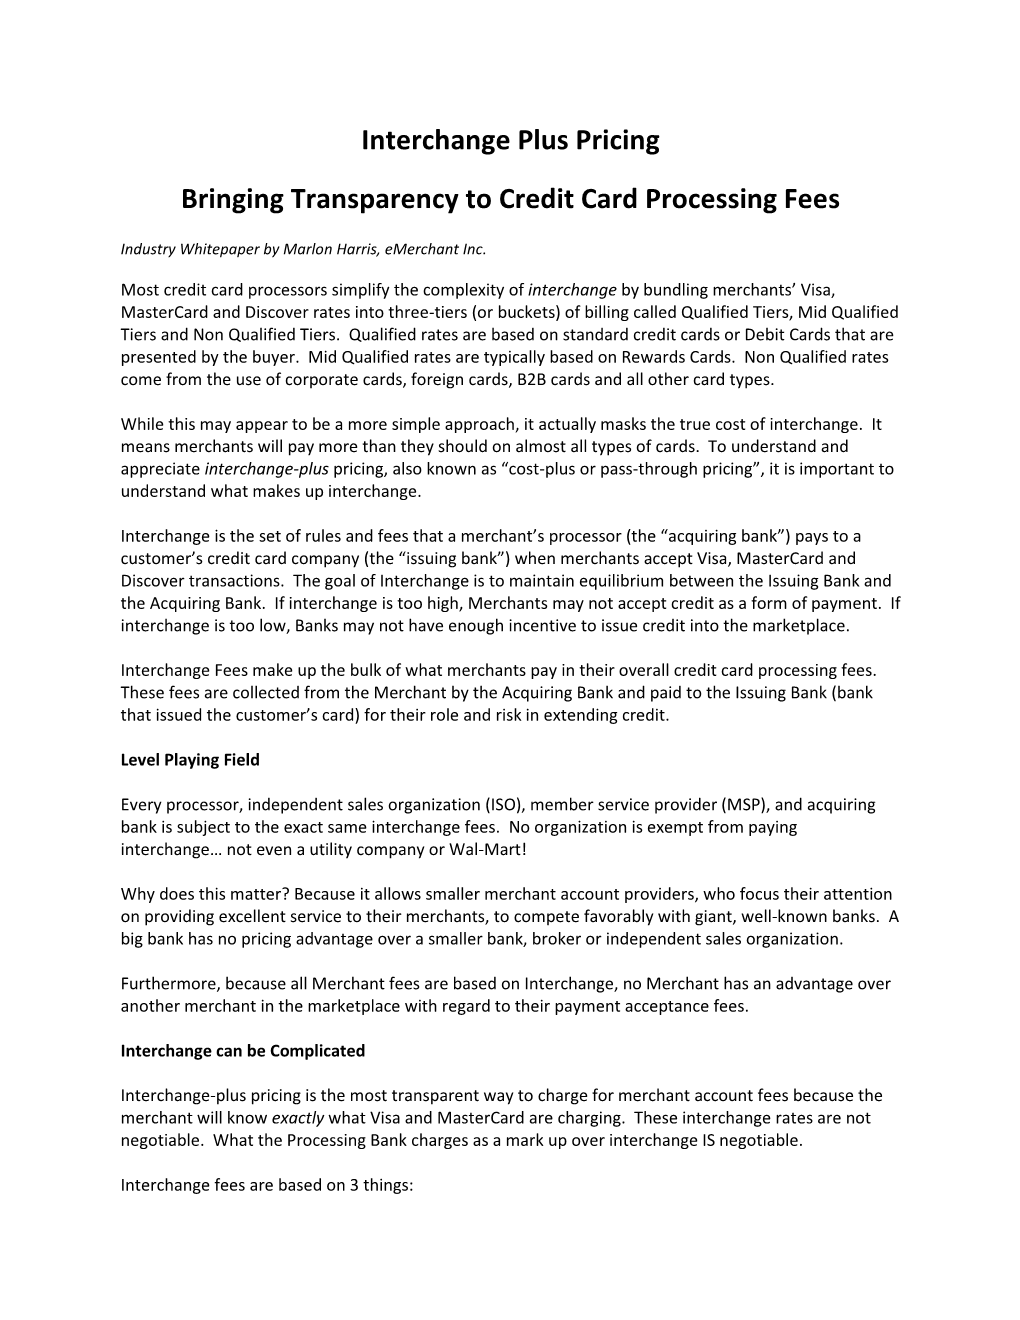 Interchange Plus Pricing Bringing Transparency to Credit Card